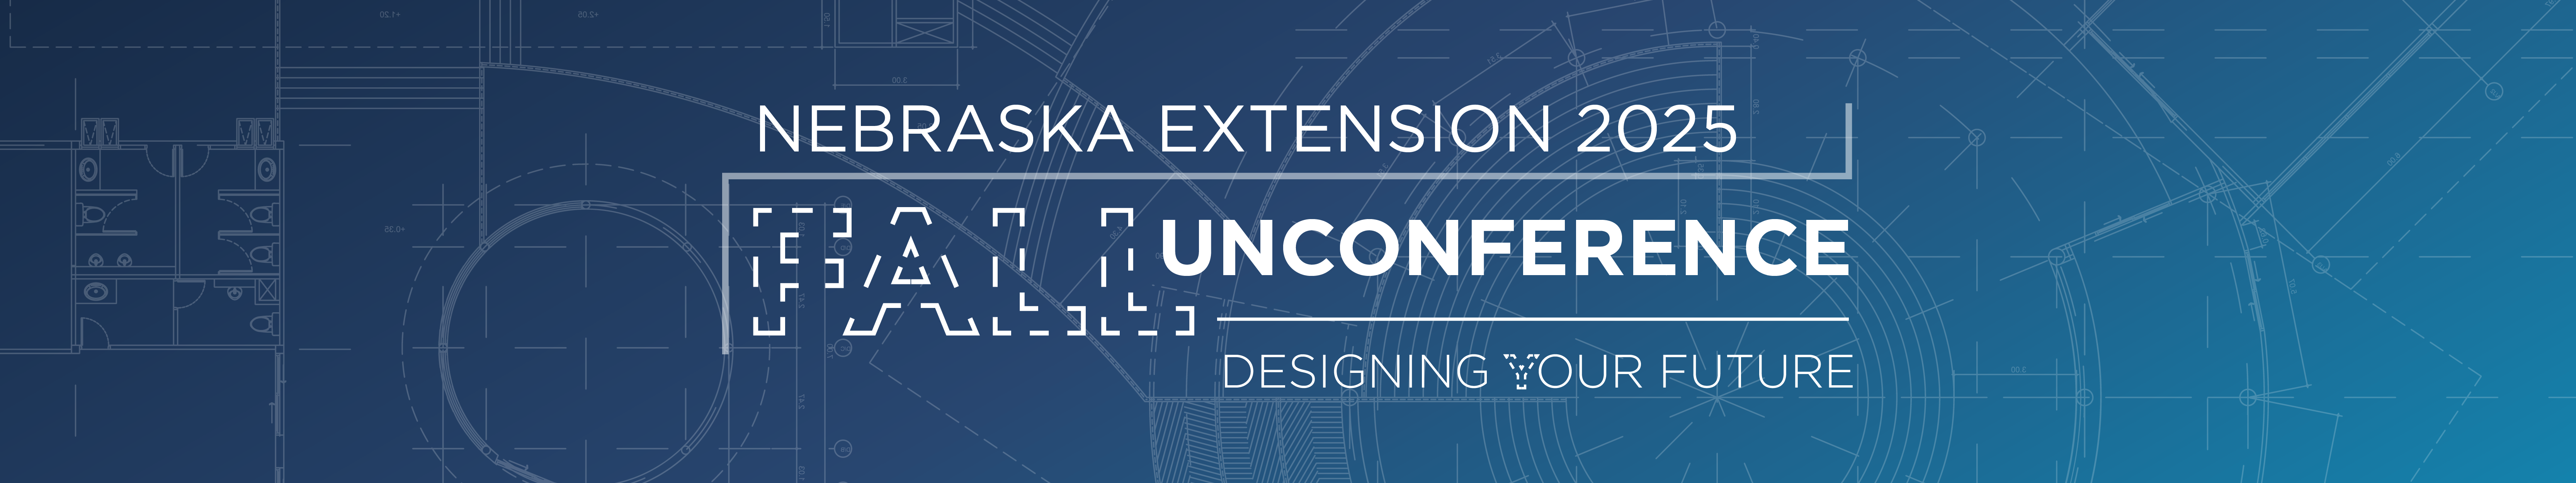 Nebraska Extension Fall UnConference